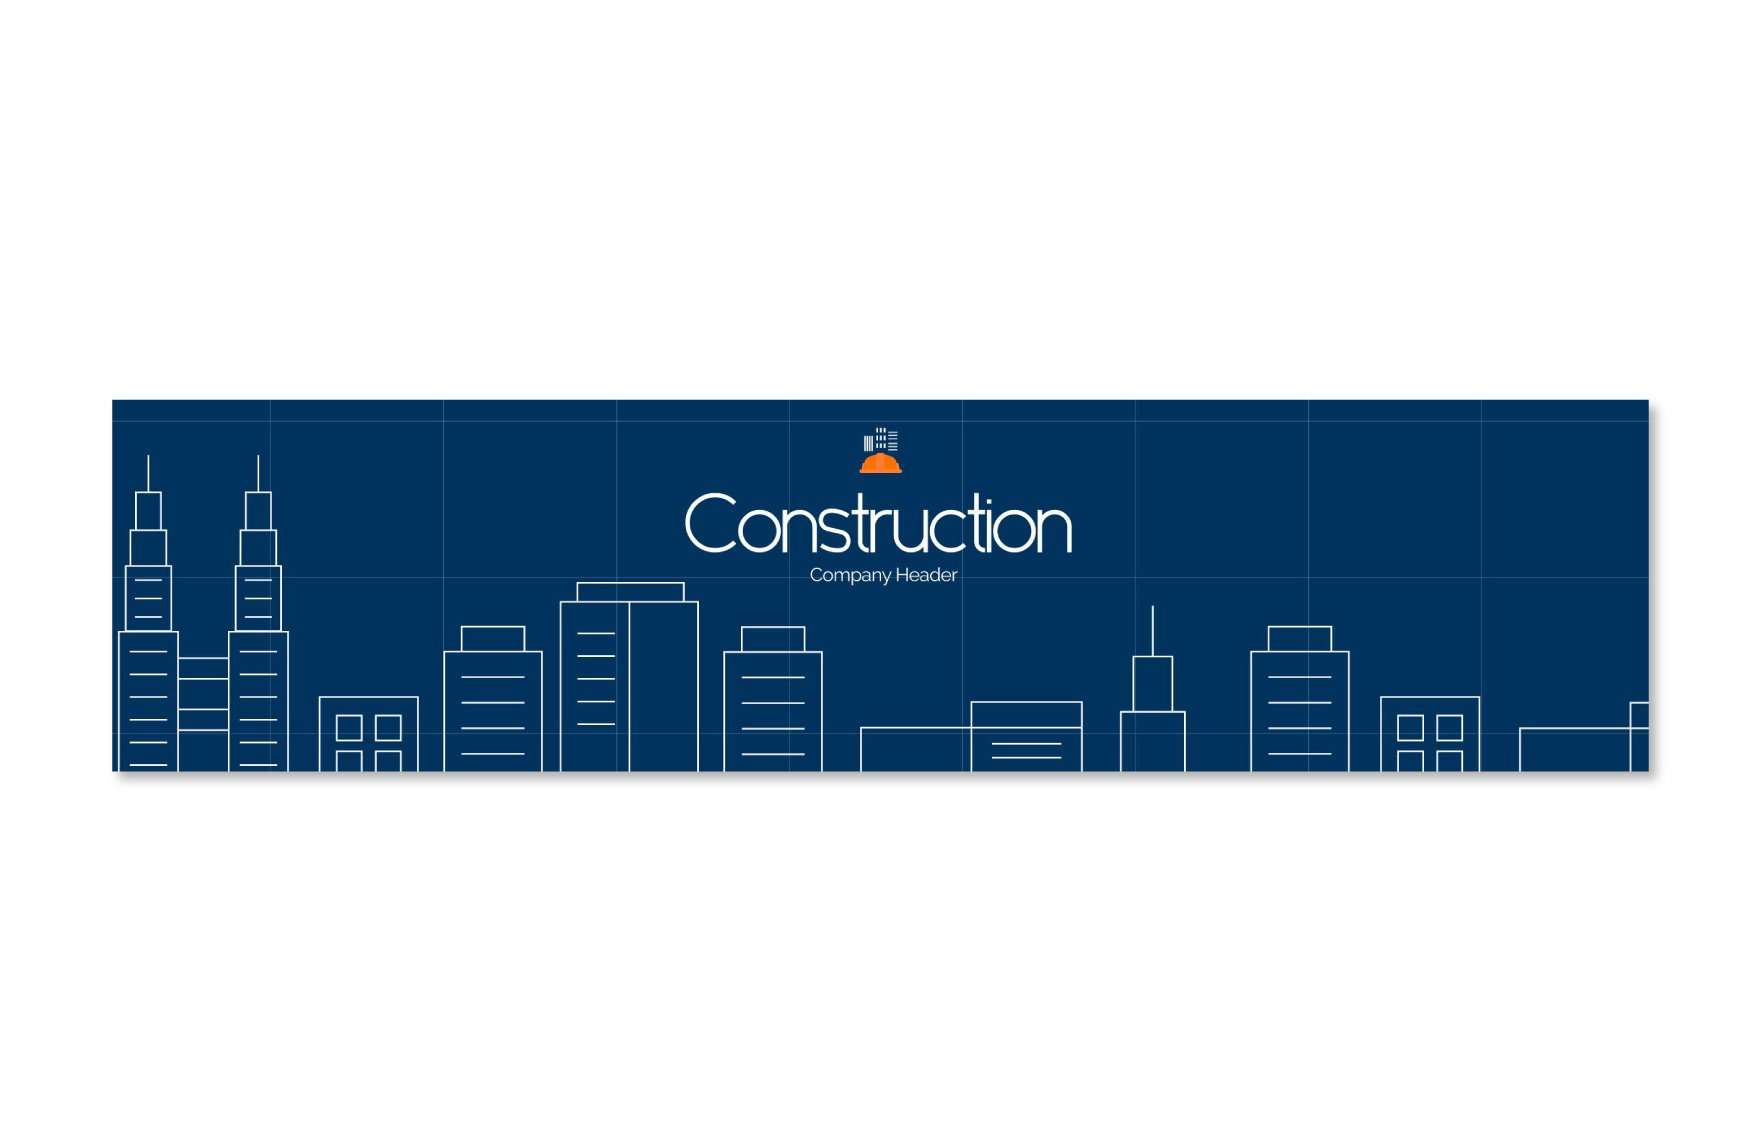 Construction Company Header Template